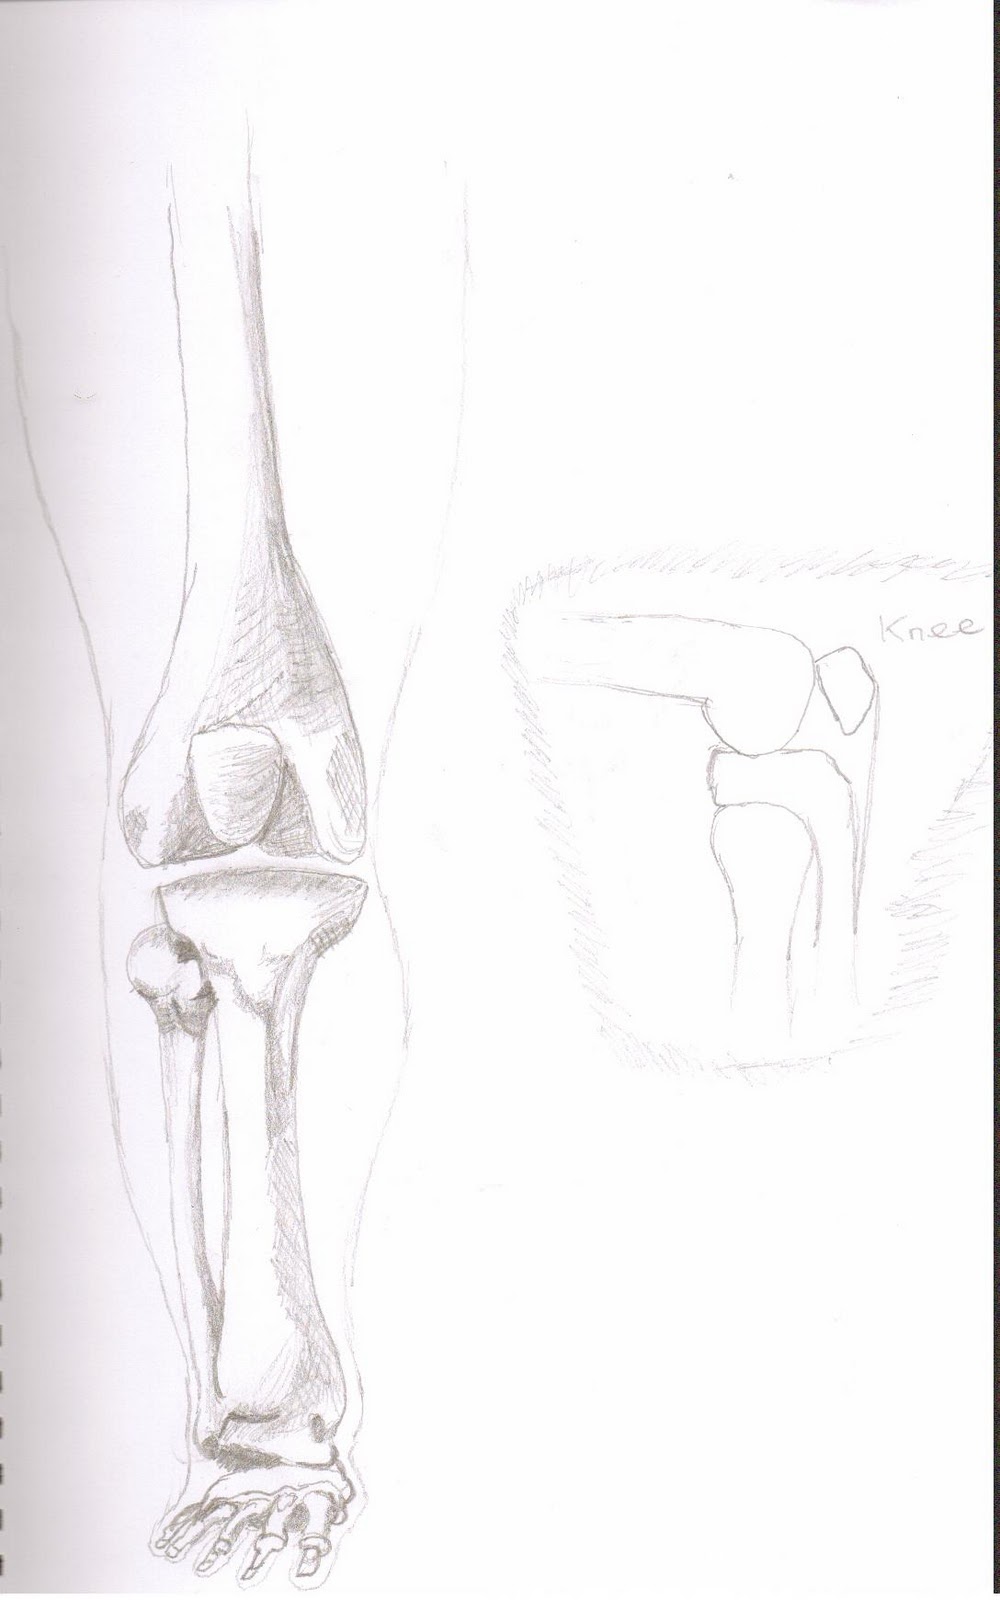 Sean S- D: More design sketches + Anatomy research